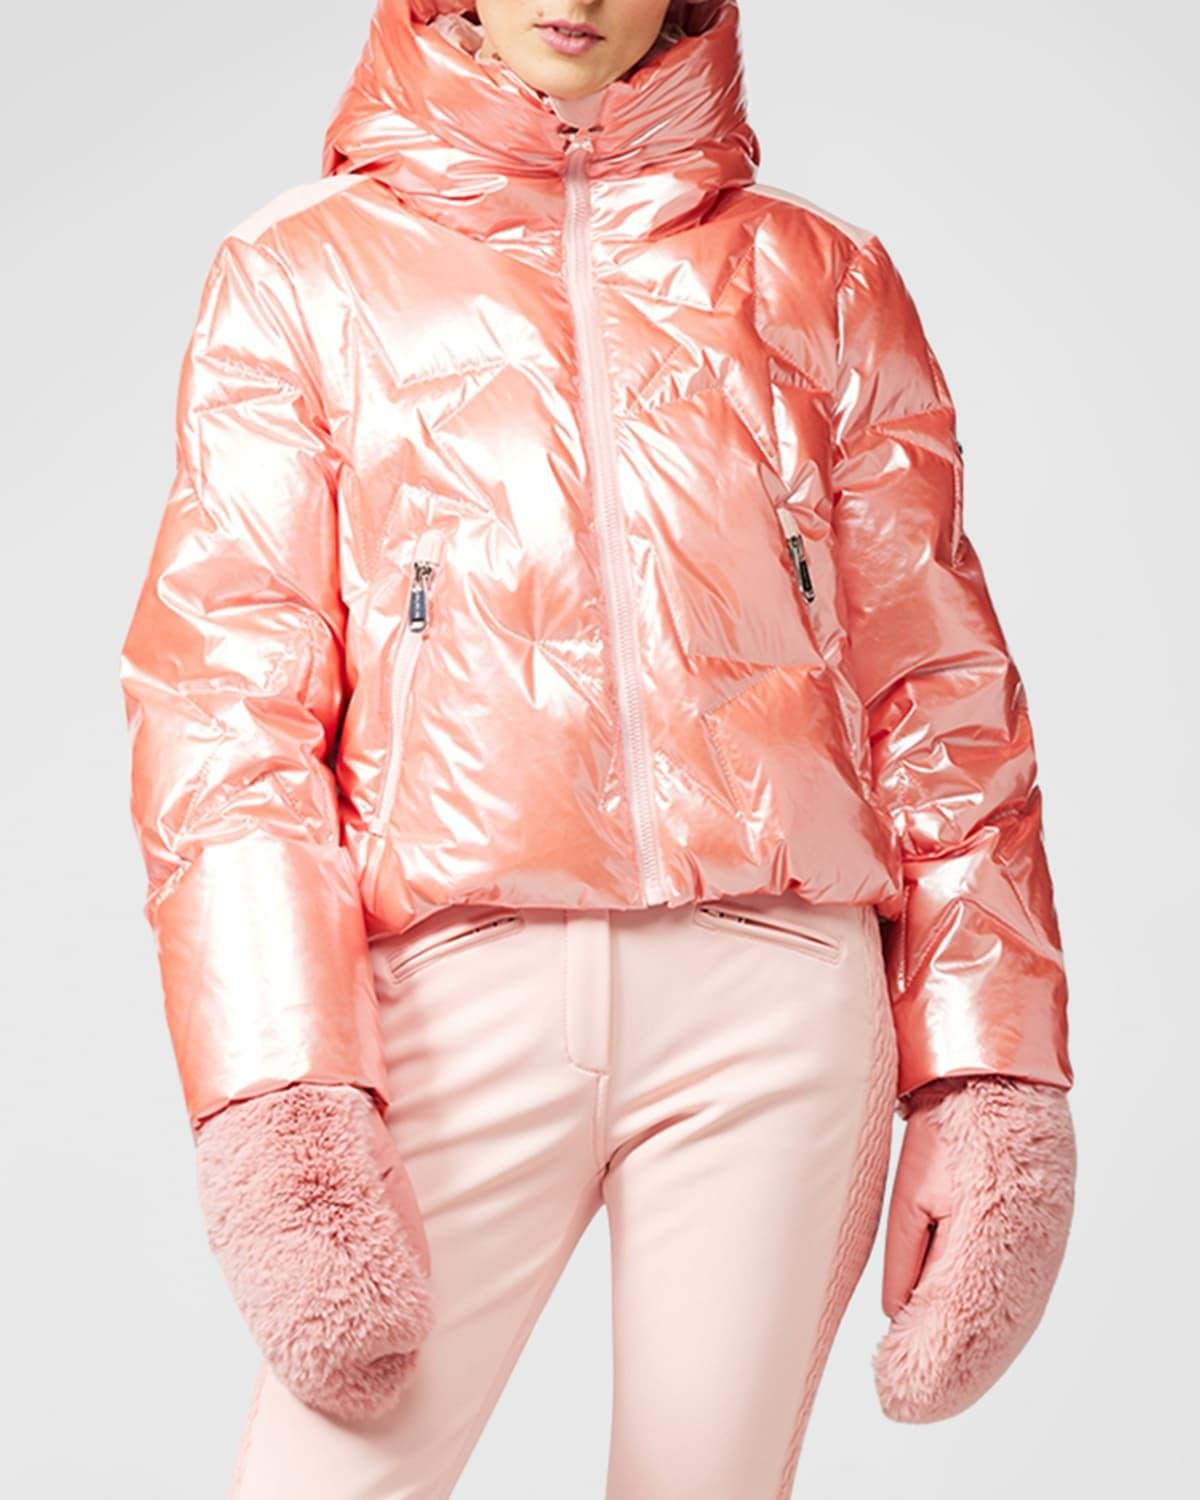 Glamstar Shiny Quilted Ski Jacket by GOLDBERGH